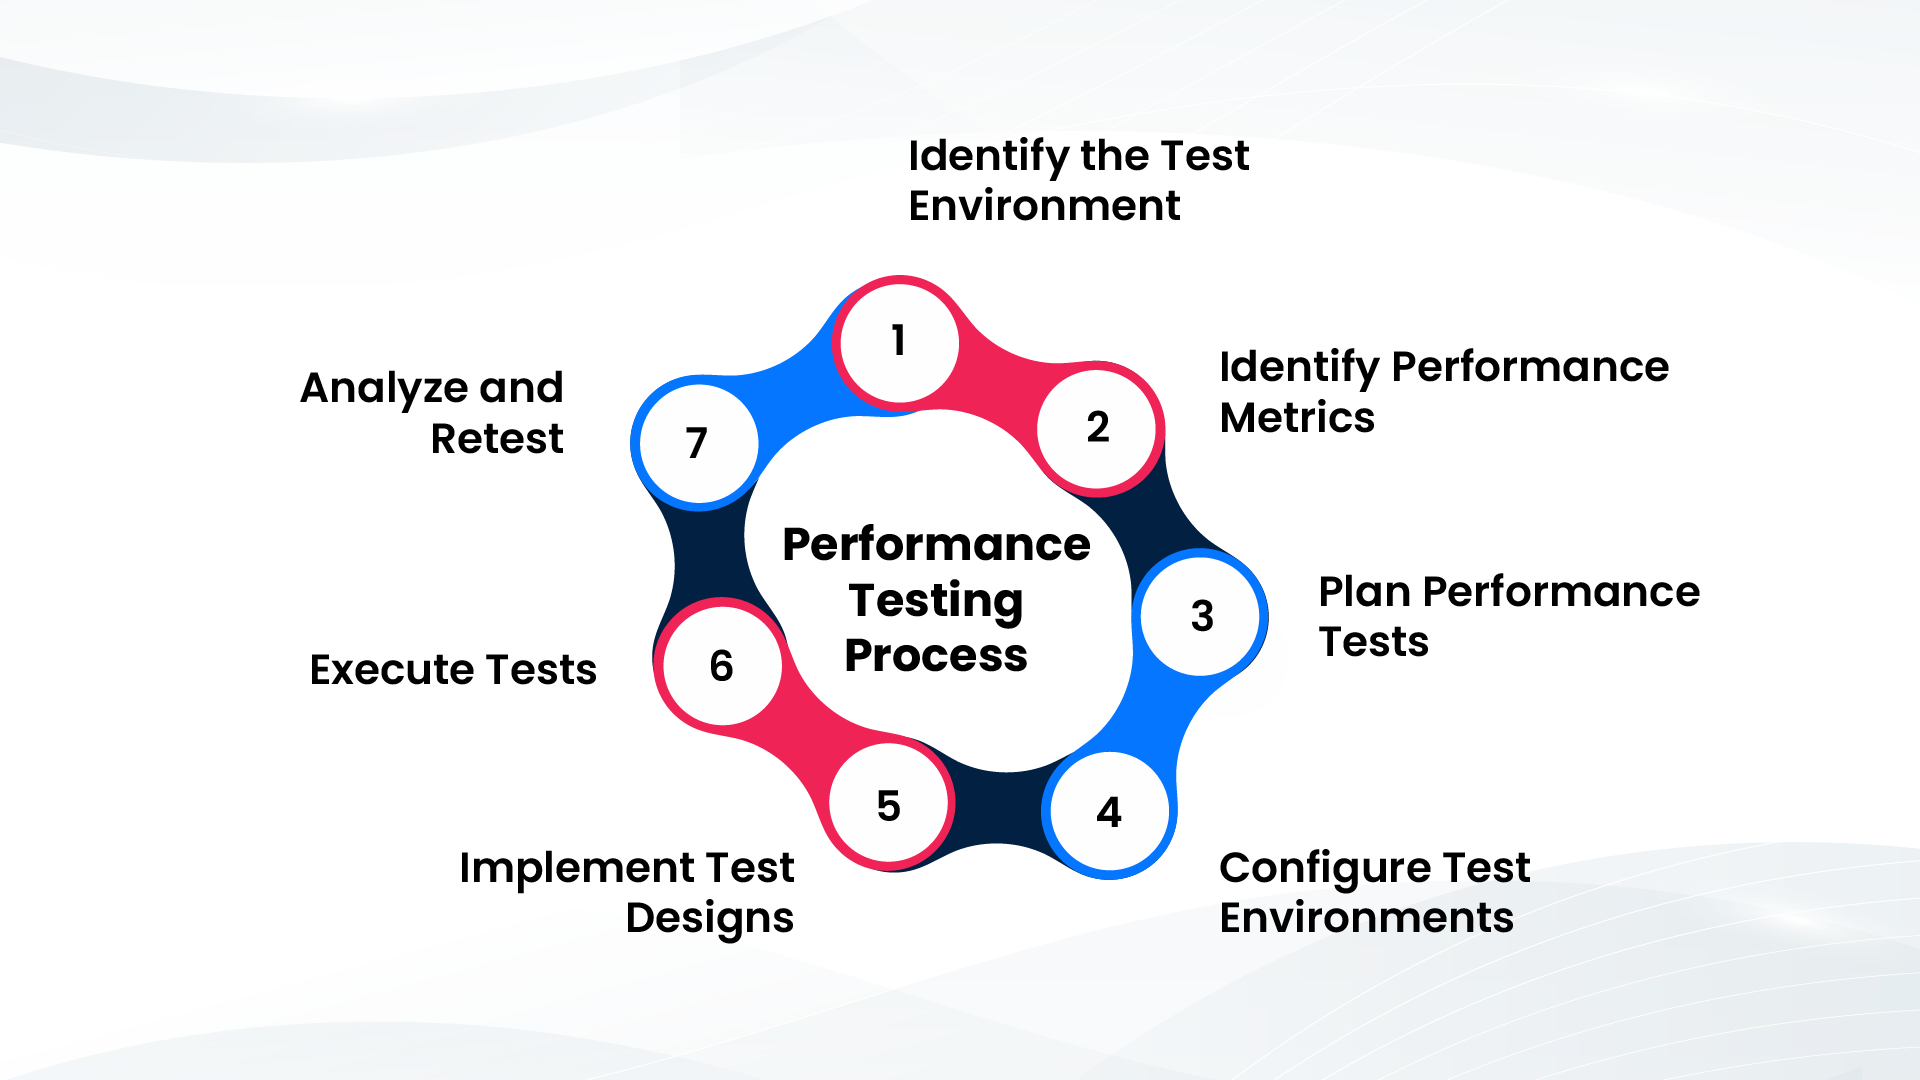 performance testing process